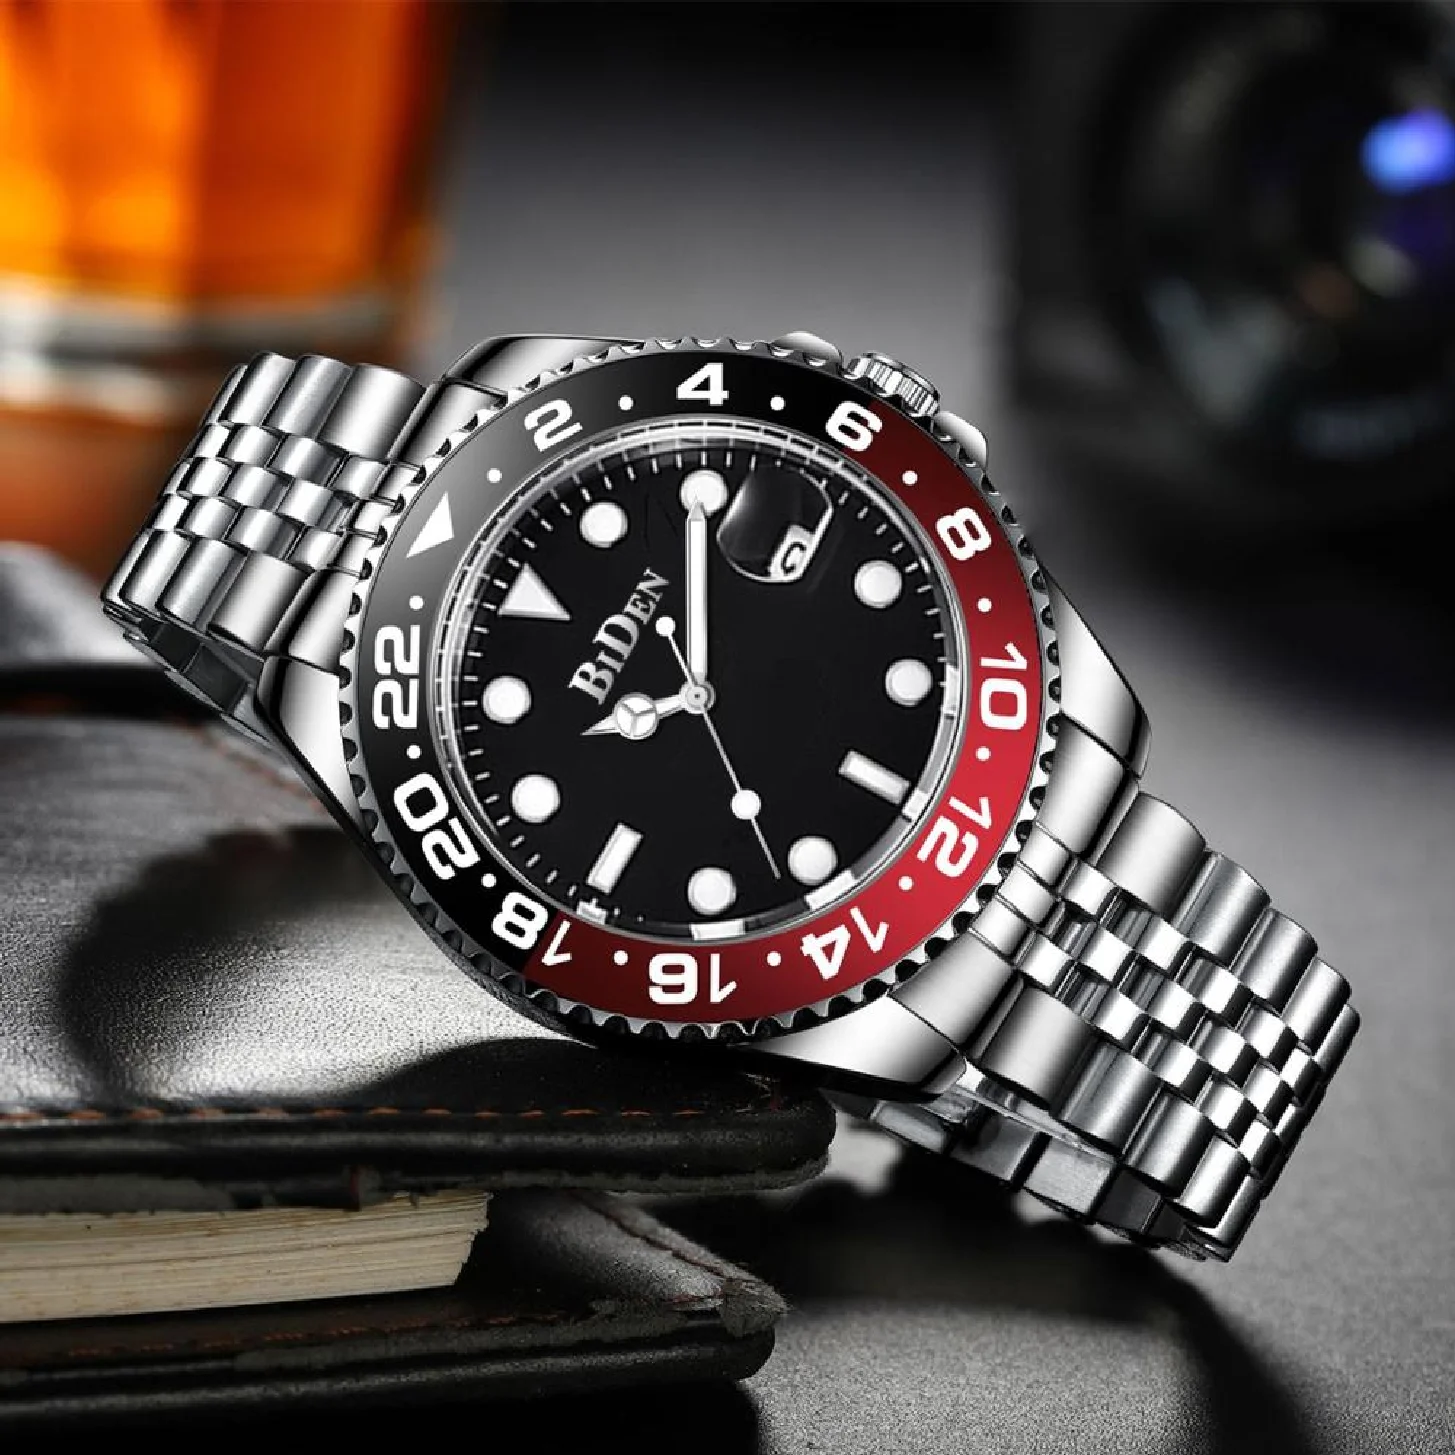 

BIDEN Luxury Brand Men Quartz Watch Full Stainless Steel Calendar Clocks Watches For Male Waterproof Clocks Gifts montre homme